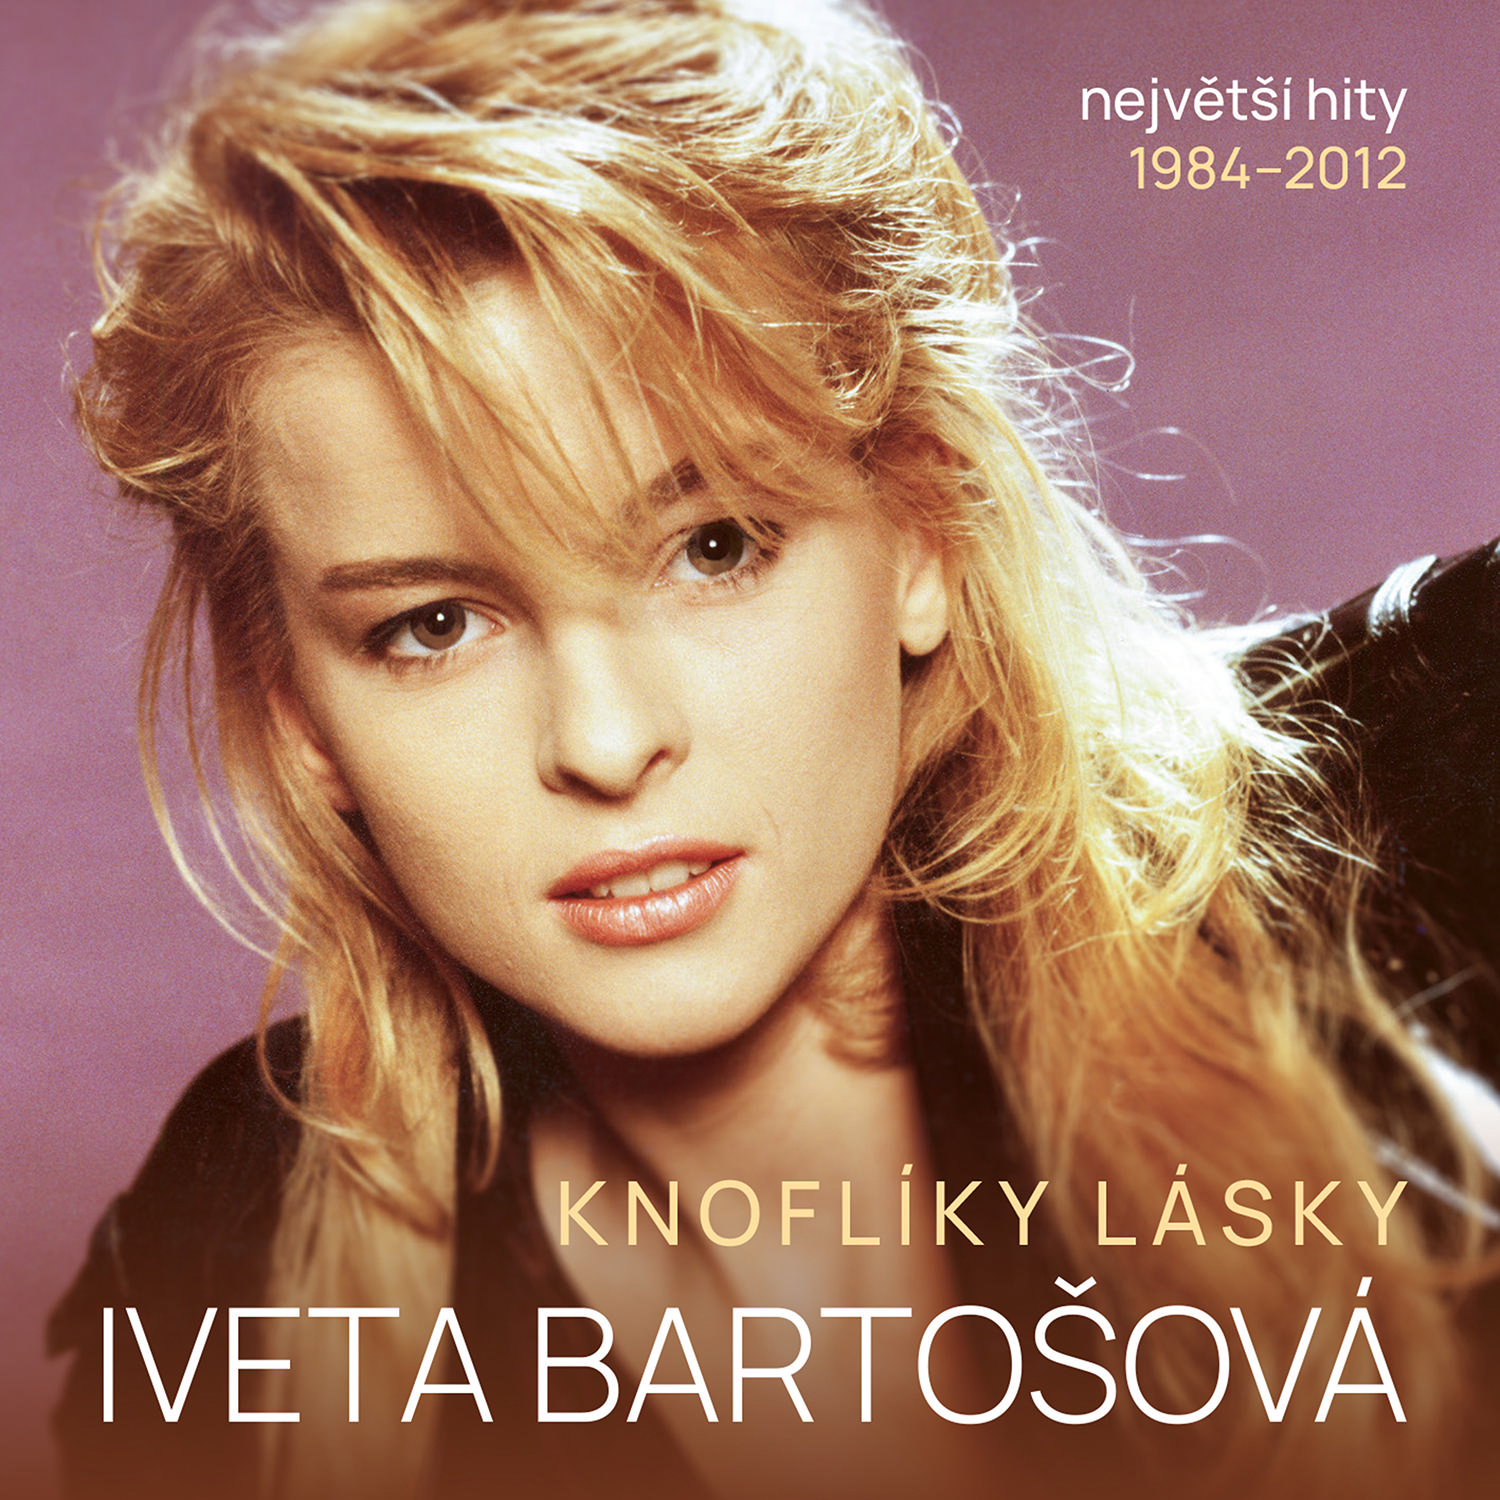 CD Shop - BARTOSOVA IVETA KNOFLIKY LASKY / NEJVETSI HITY 1984-2012